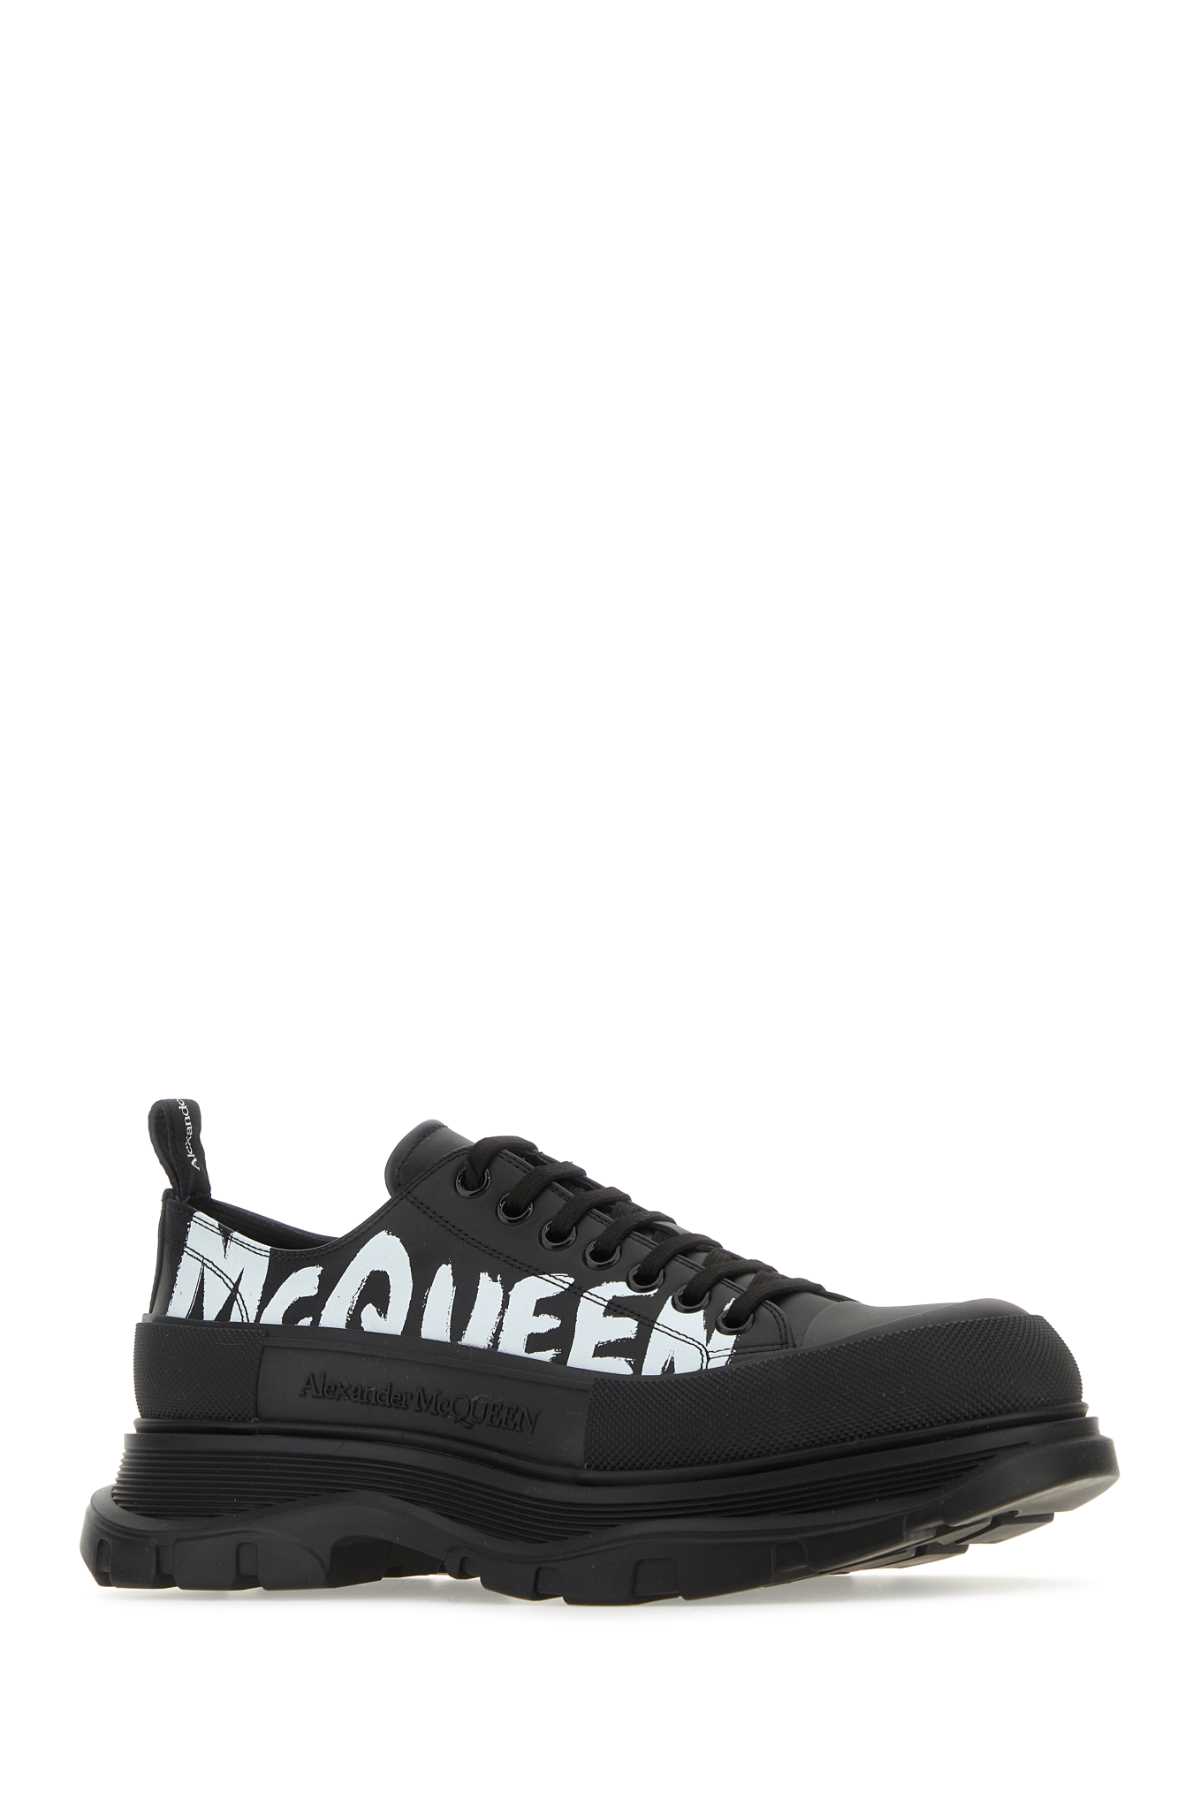 Alexander Mcqueen Black Leather Tread Slick Sneakers In Blkblkblkwhite